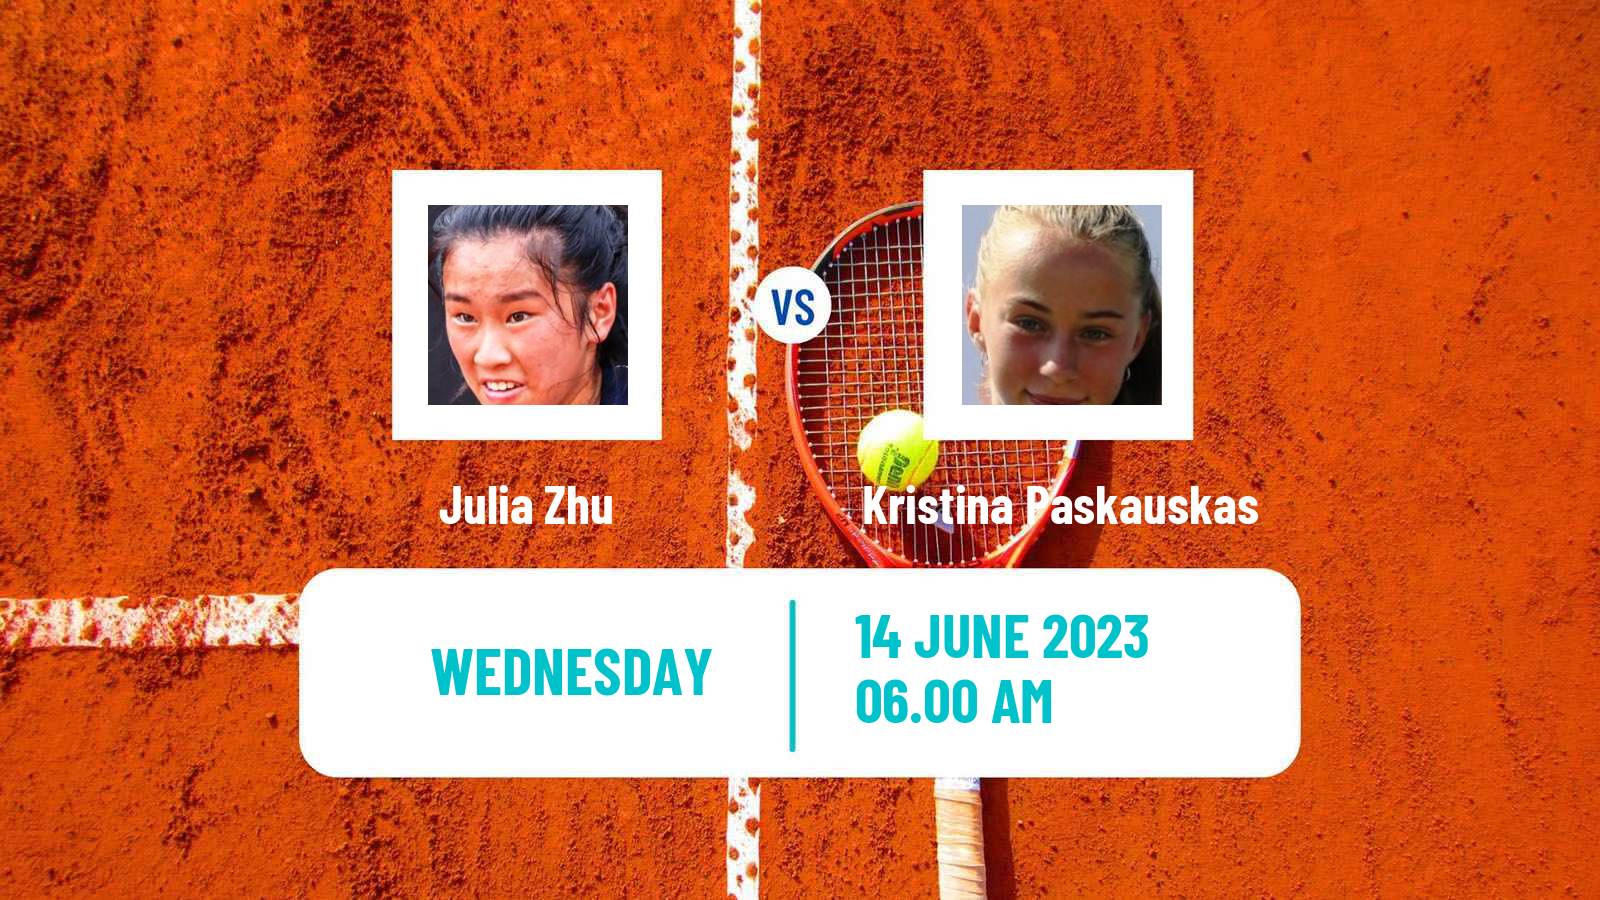 Tennis ITF W15 Monastir 19 Women Julia Zhu - Kristina Paskauskas